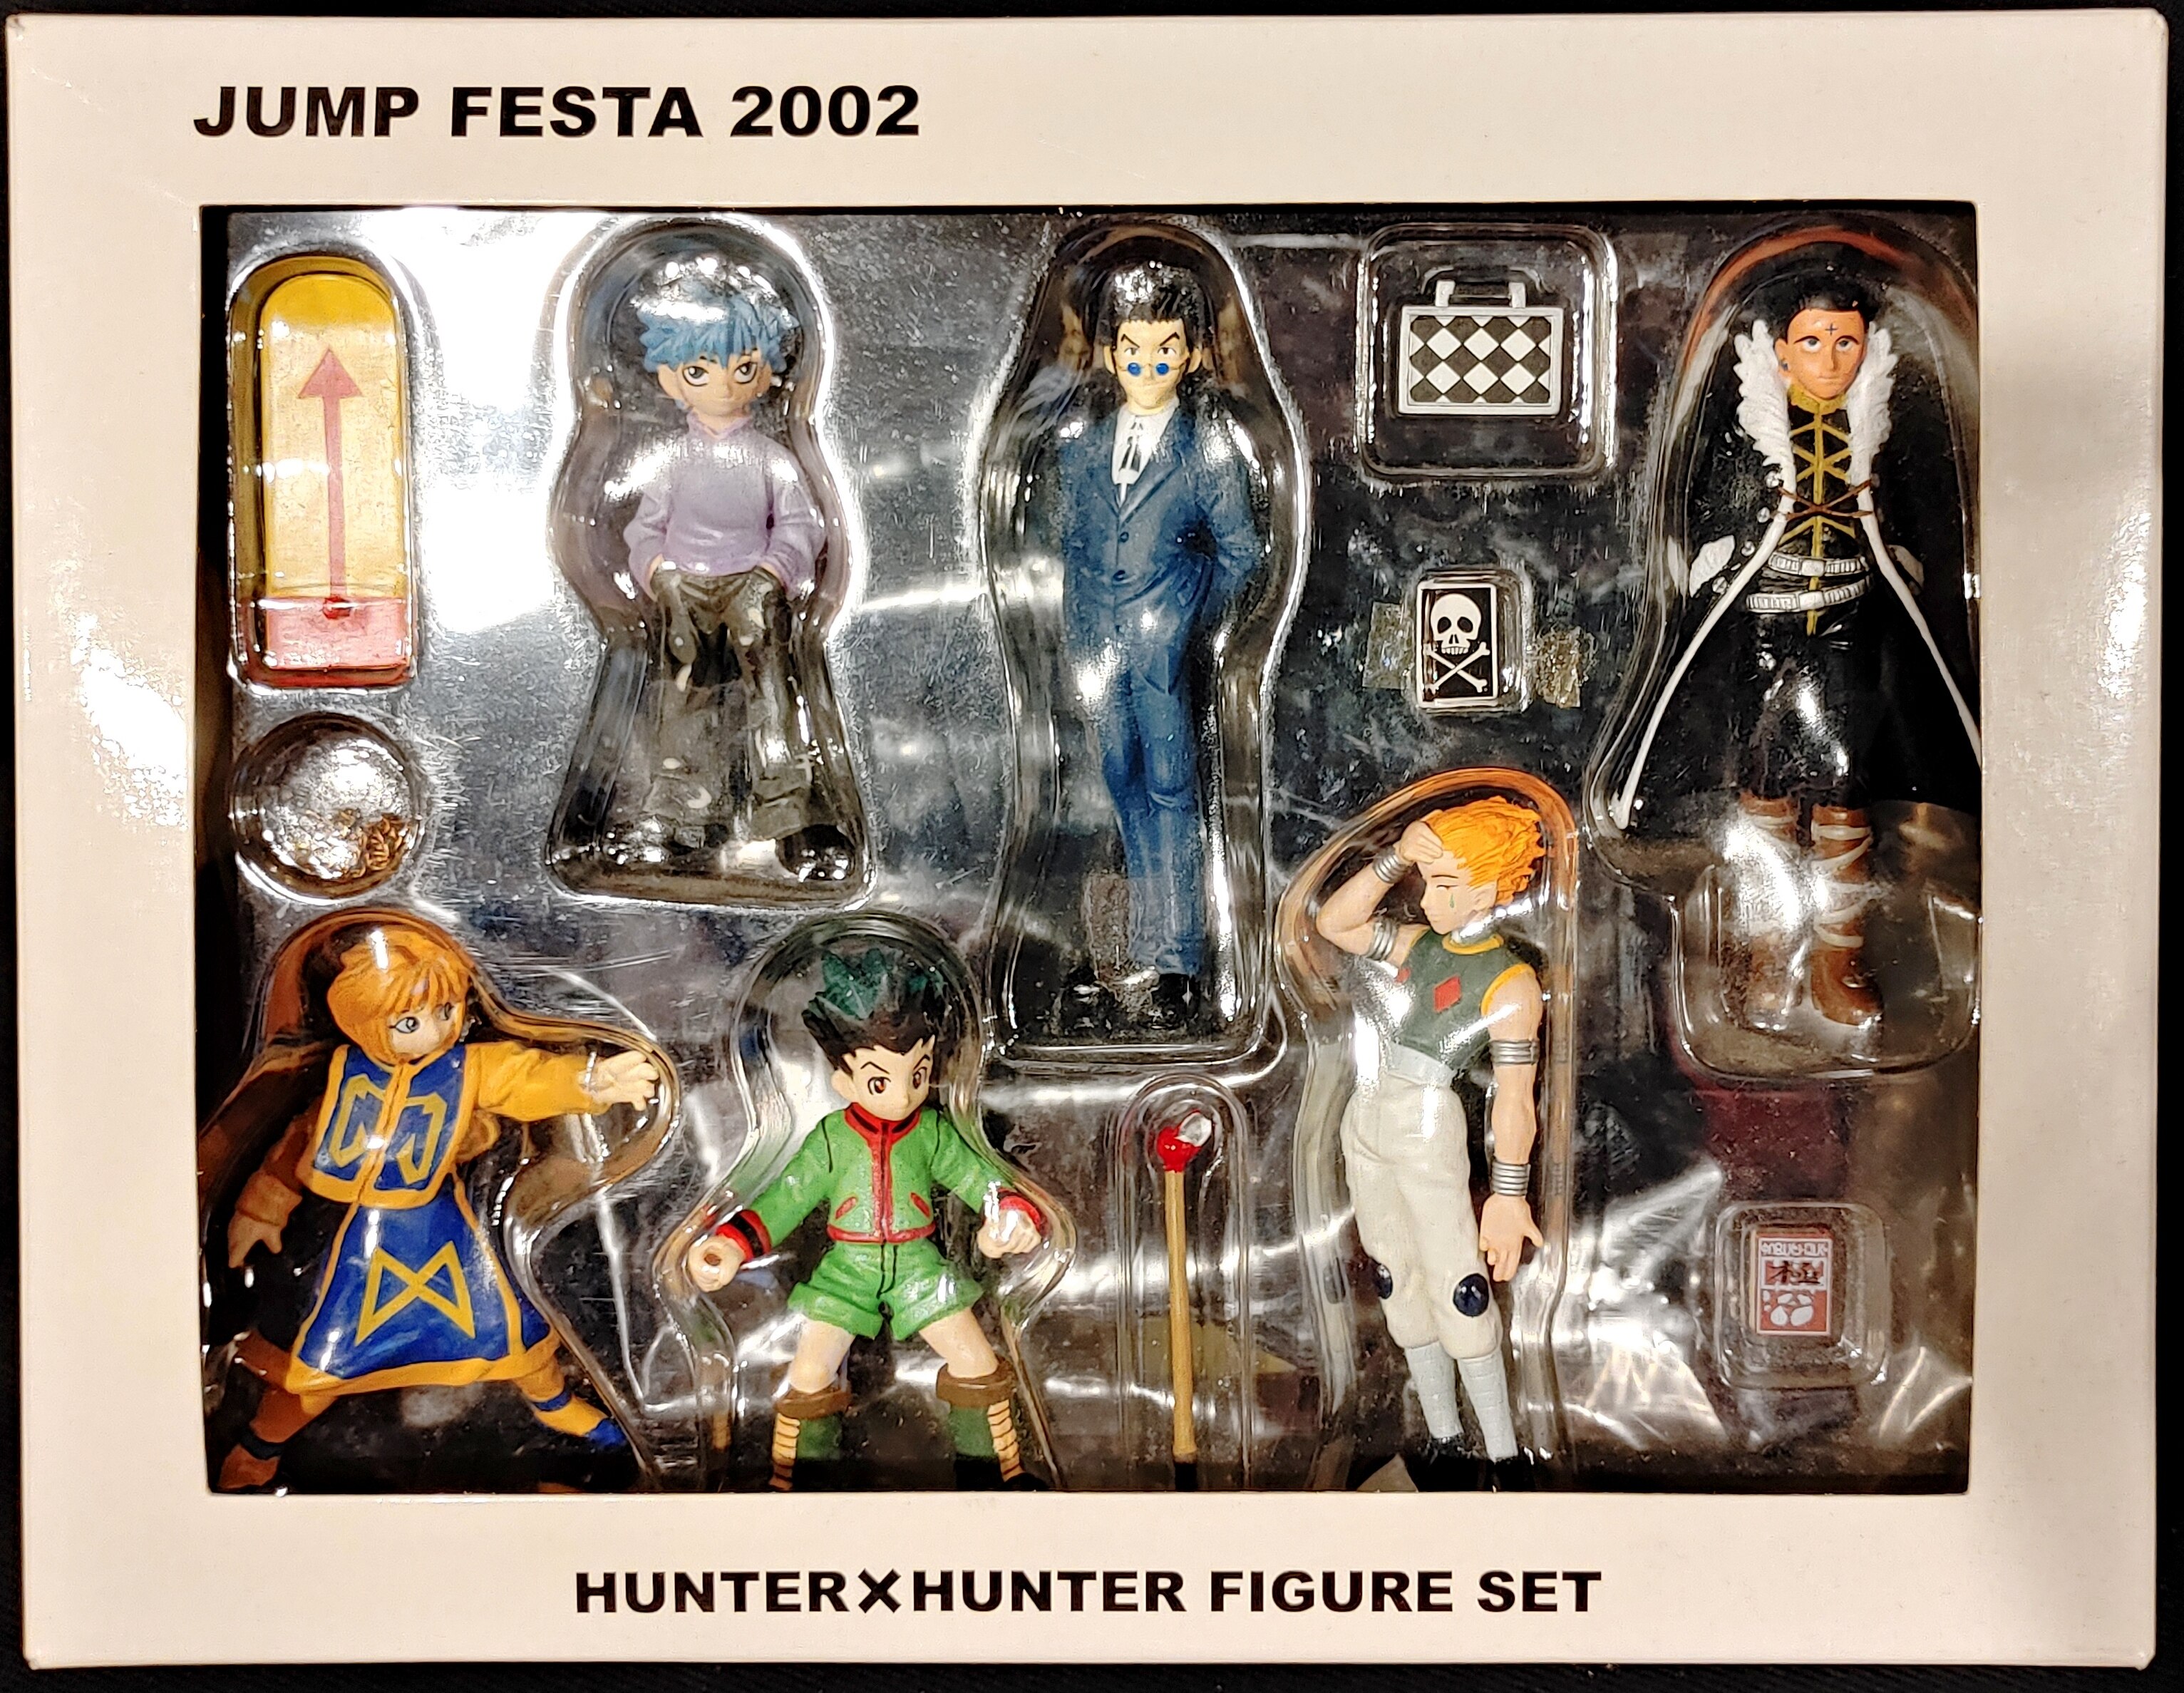 HUNTER×HUNTERジャンプフェスタ2002 フィギュア ハンターハンター 